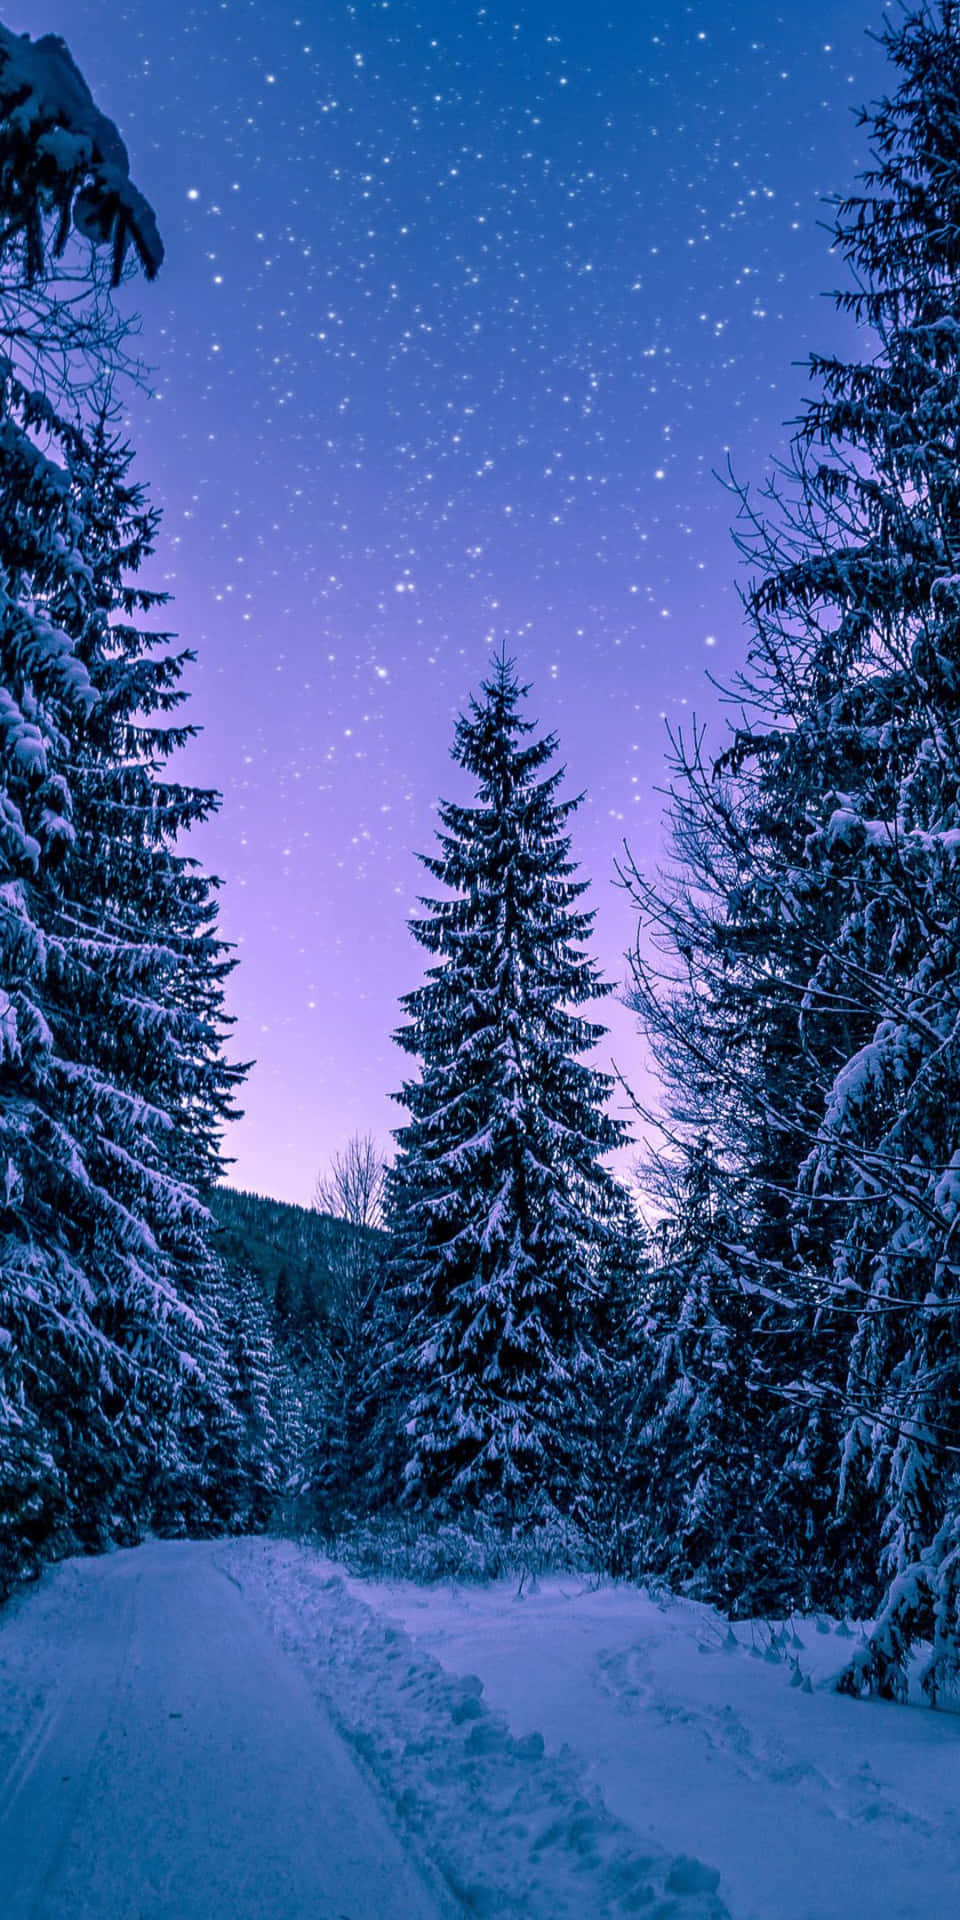 Sfondoinvernale Per Pixel 3: Alberi Di Pino Coperti Di Neve